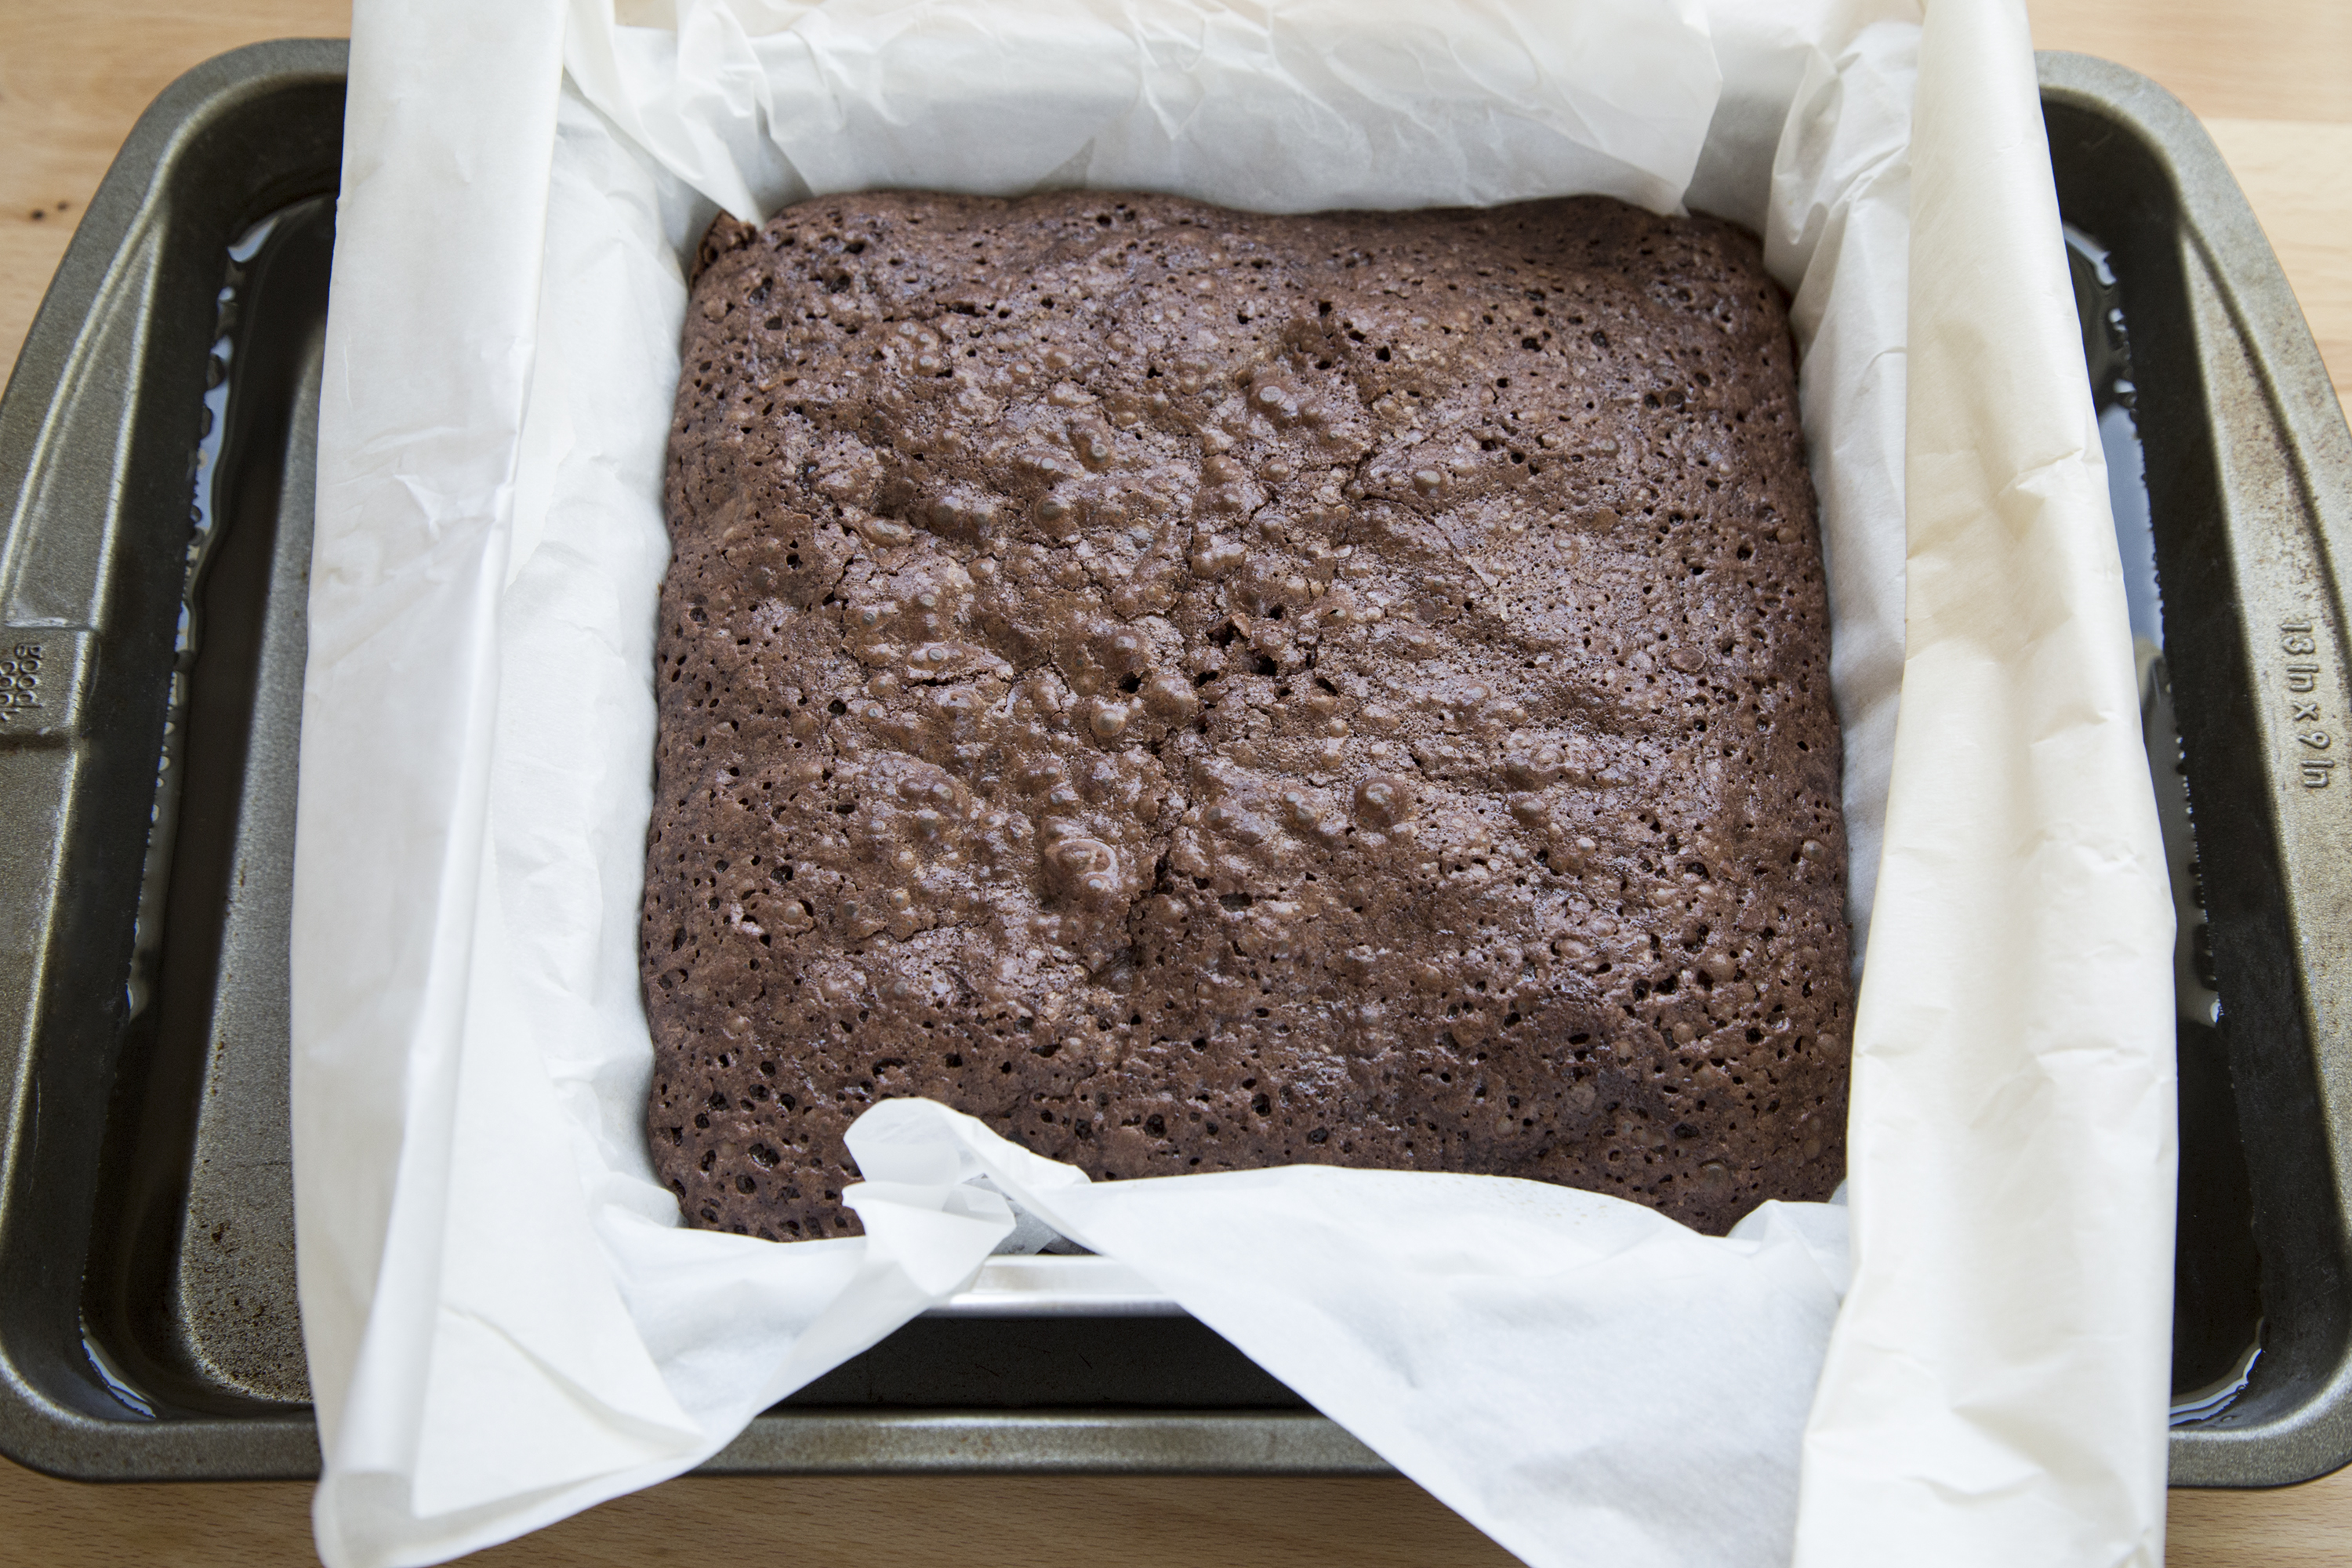 Your Pyrex Pan Actually Isn't the Best Pan for Baking Brownies